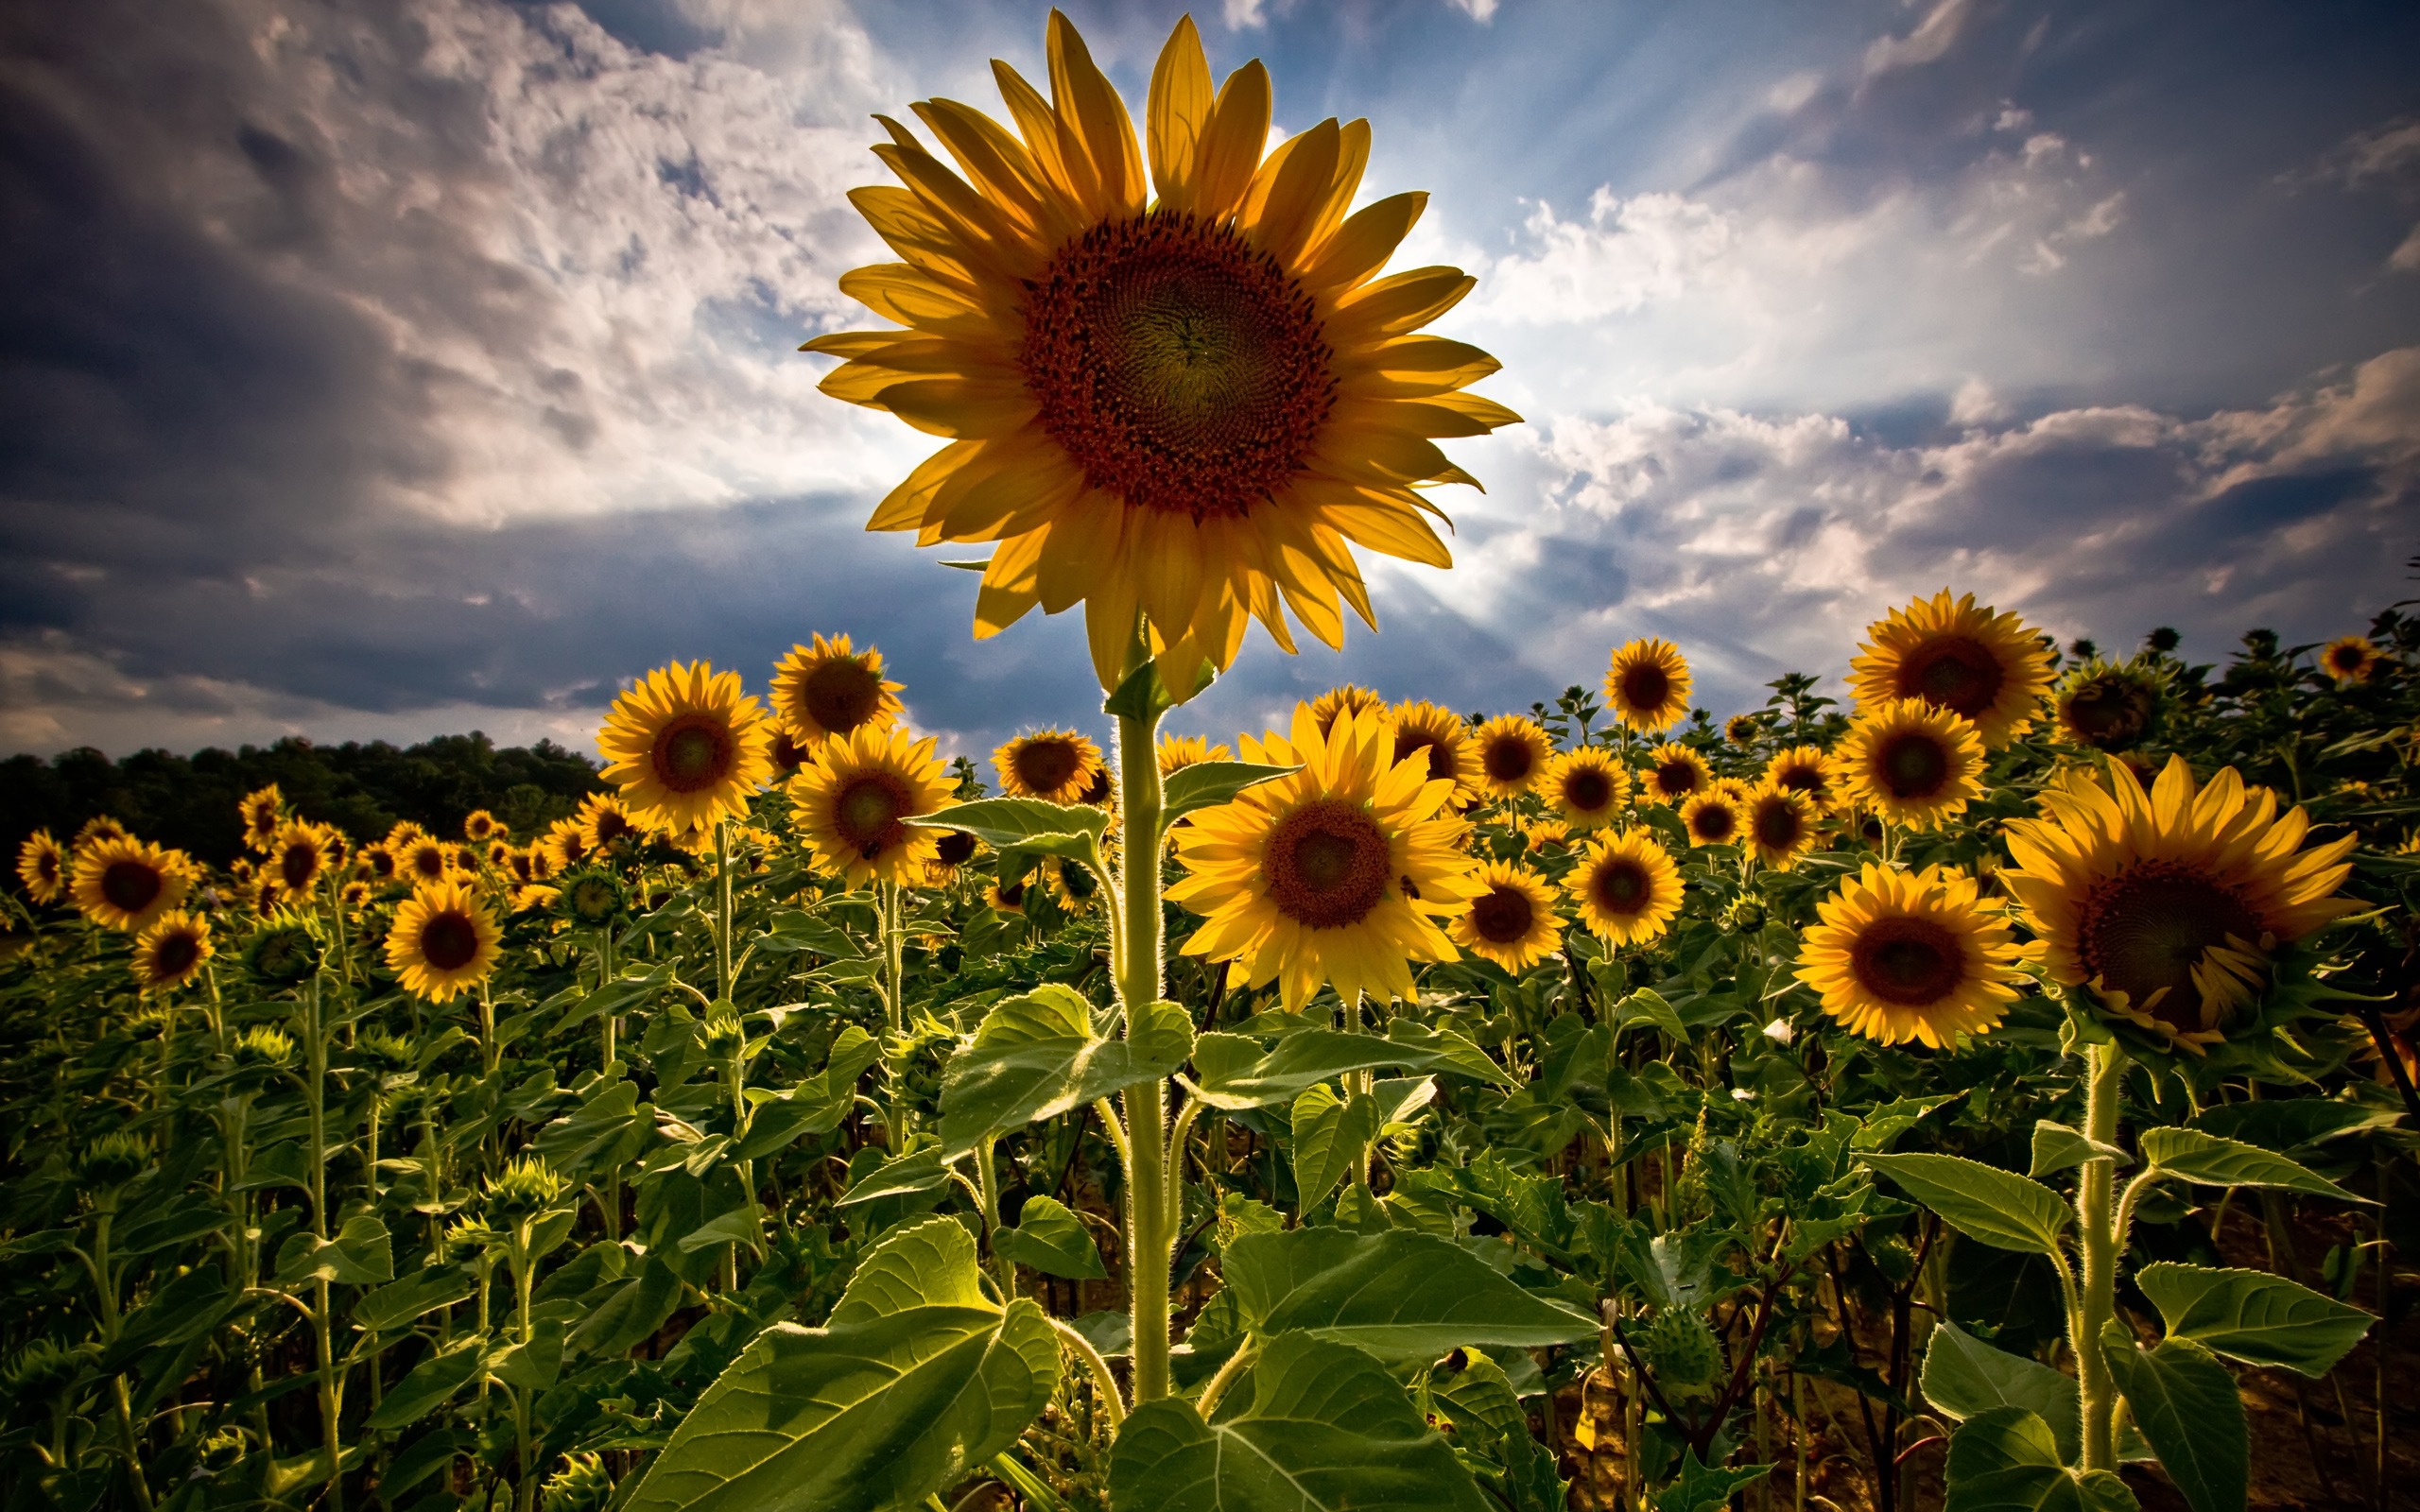 Sunflower 2560x1600 001